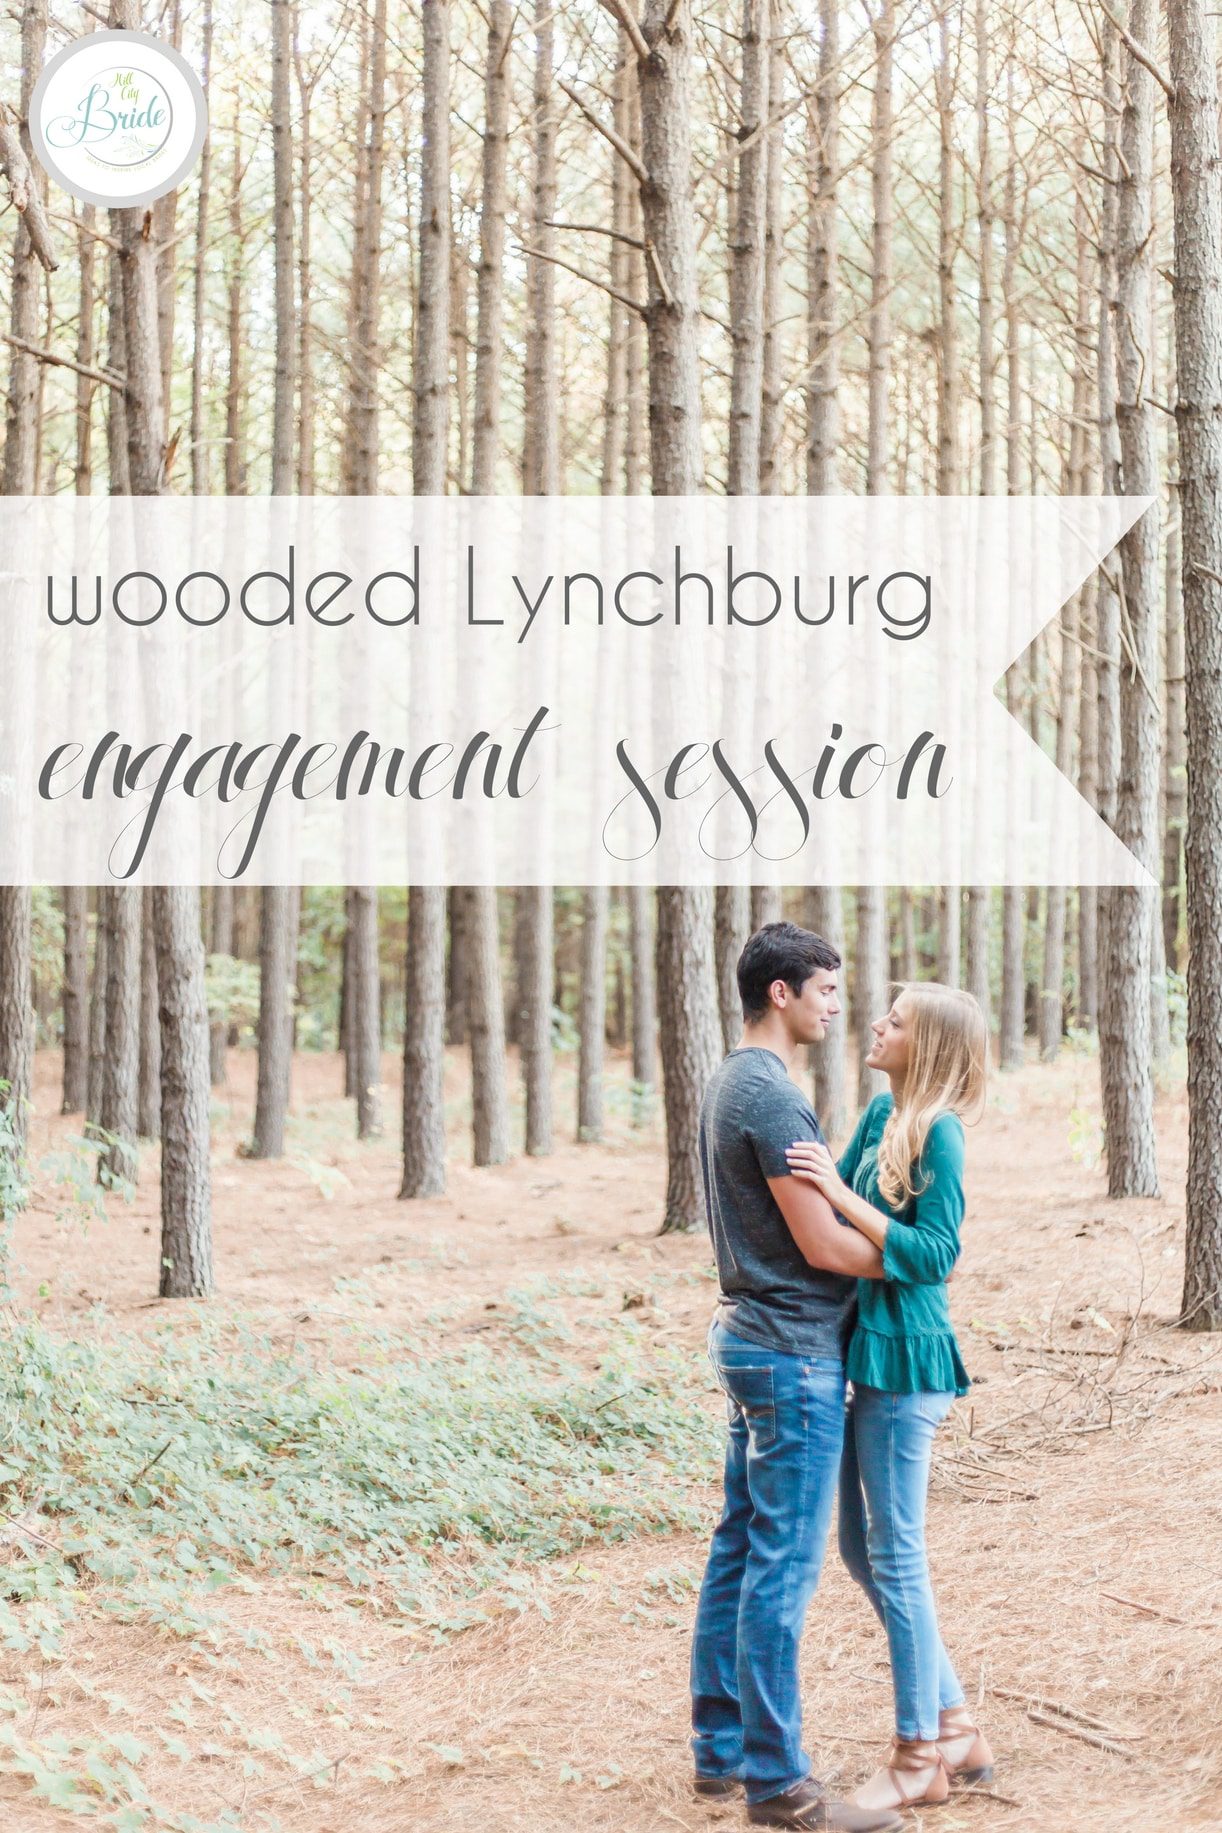 Wooded Lynchburg Engagement Session as seen on Hill City Bride Lynchburg Wedding Blog